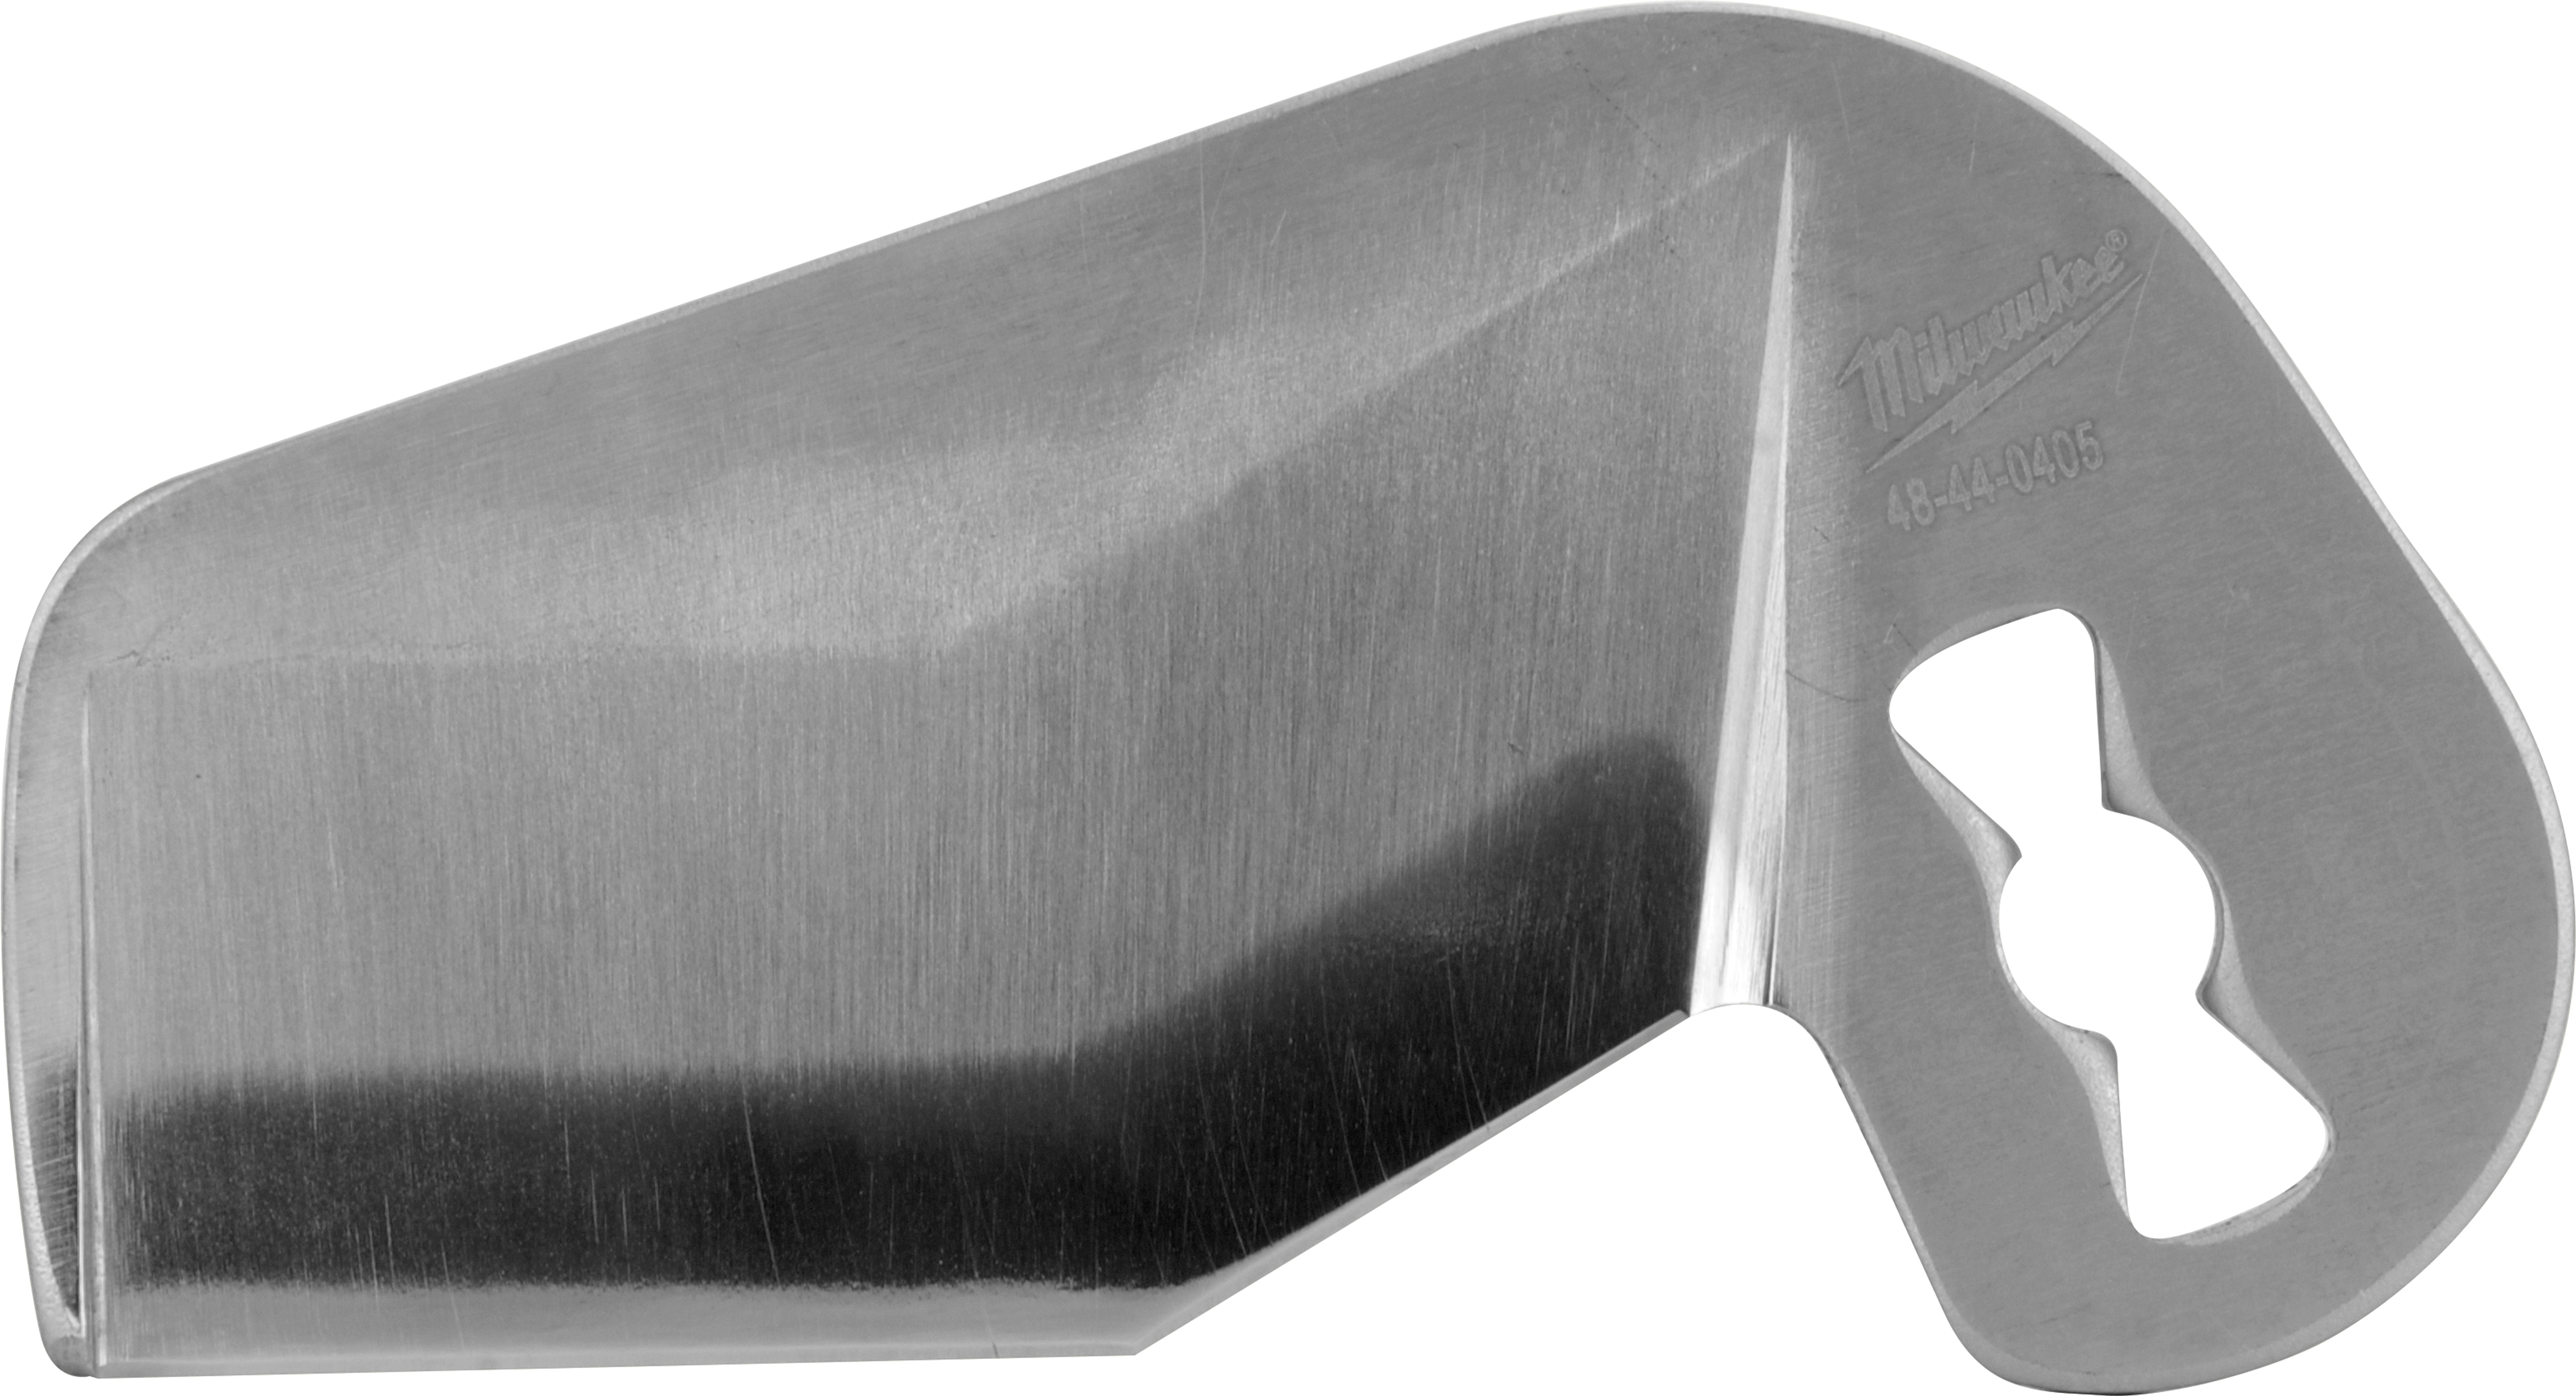 Milwaukee® 48-44-0122 Shear Blade Set, For Use With 6805 Metal Cutting Shear, 16/18 ga Capacity